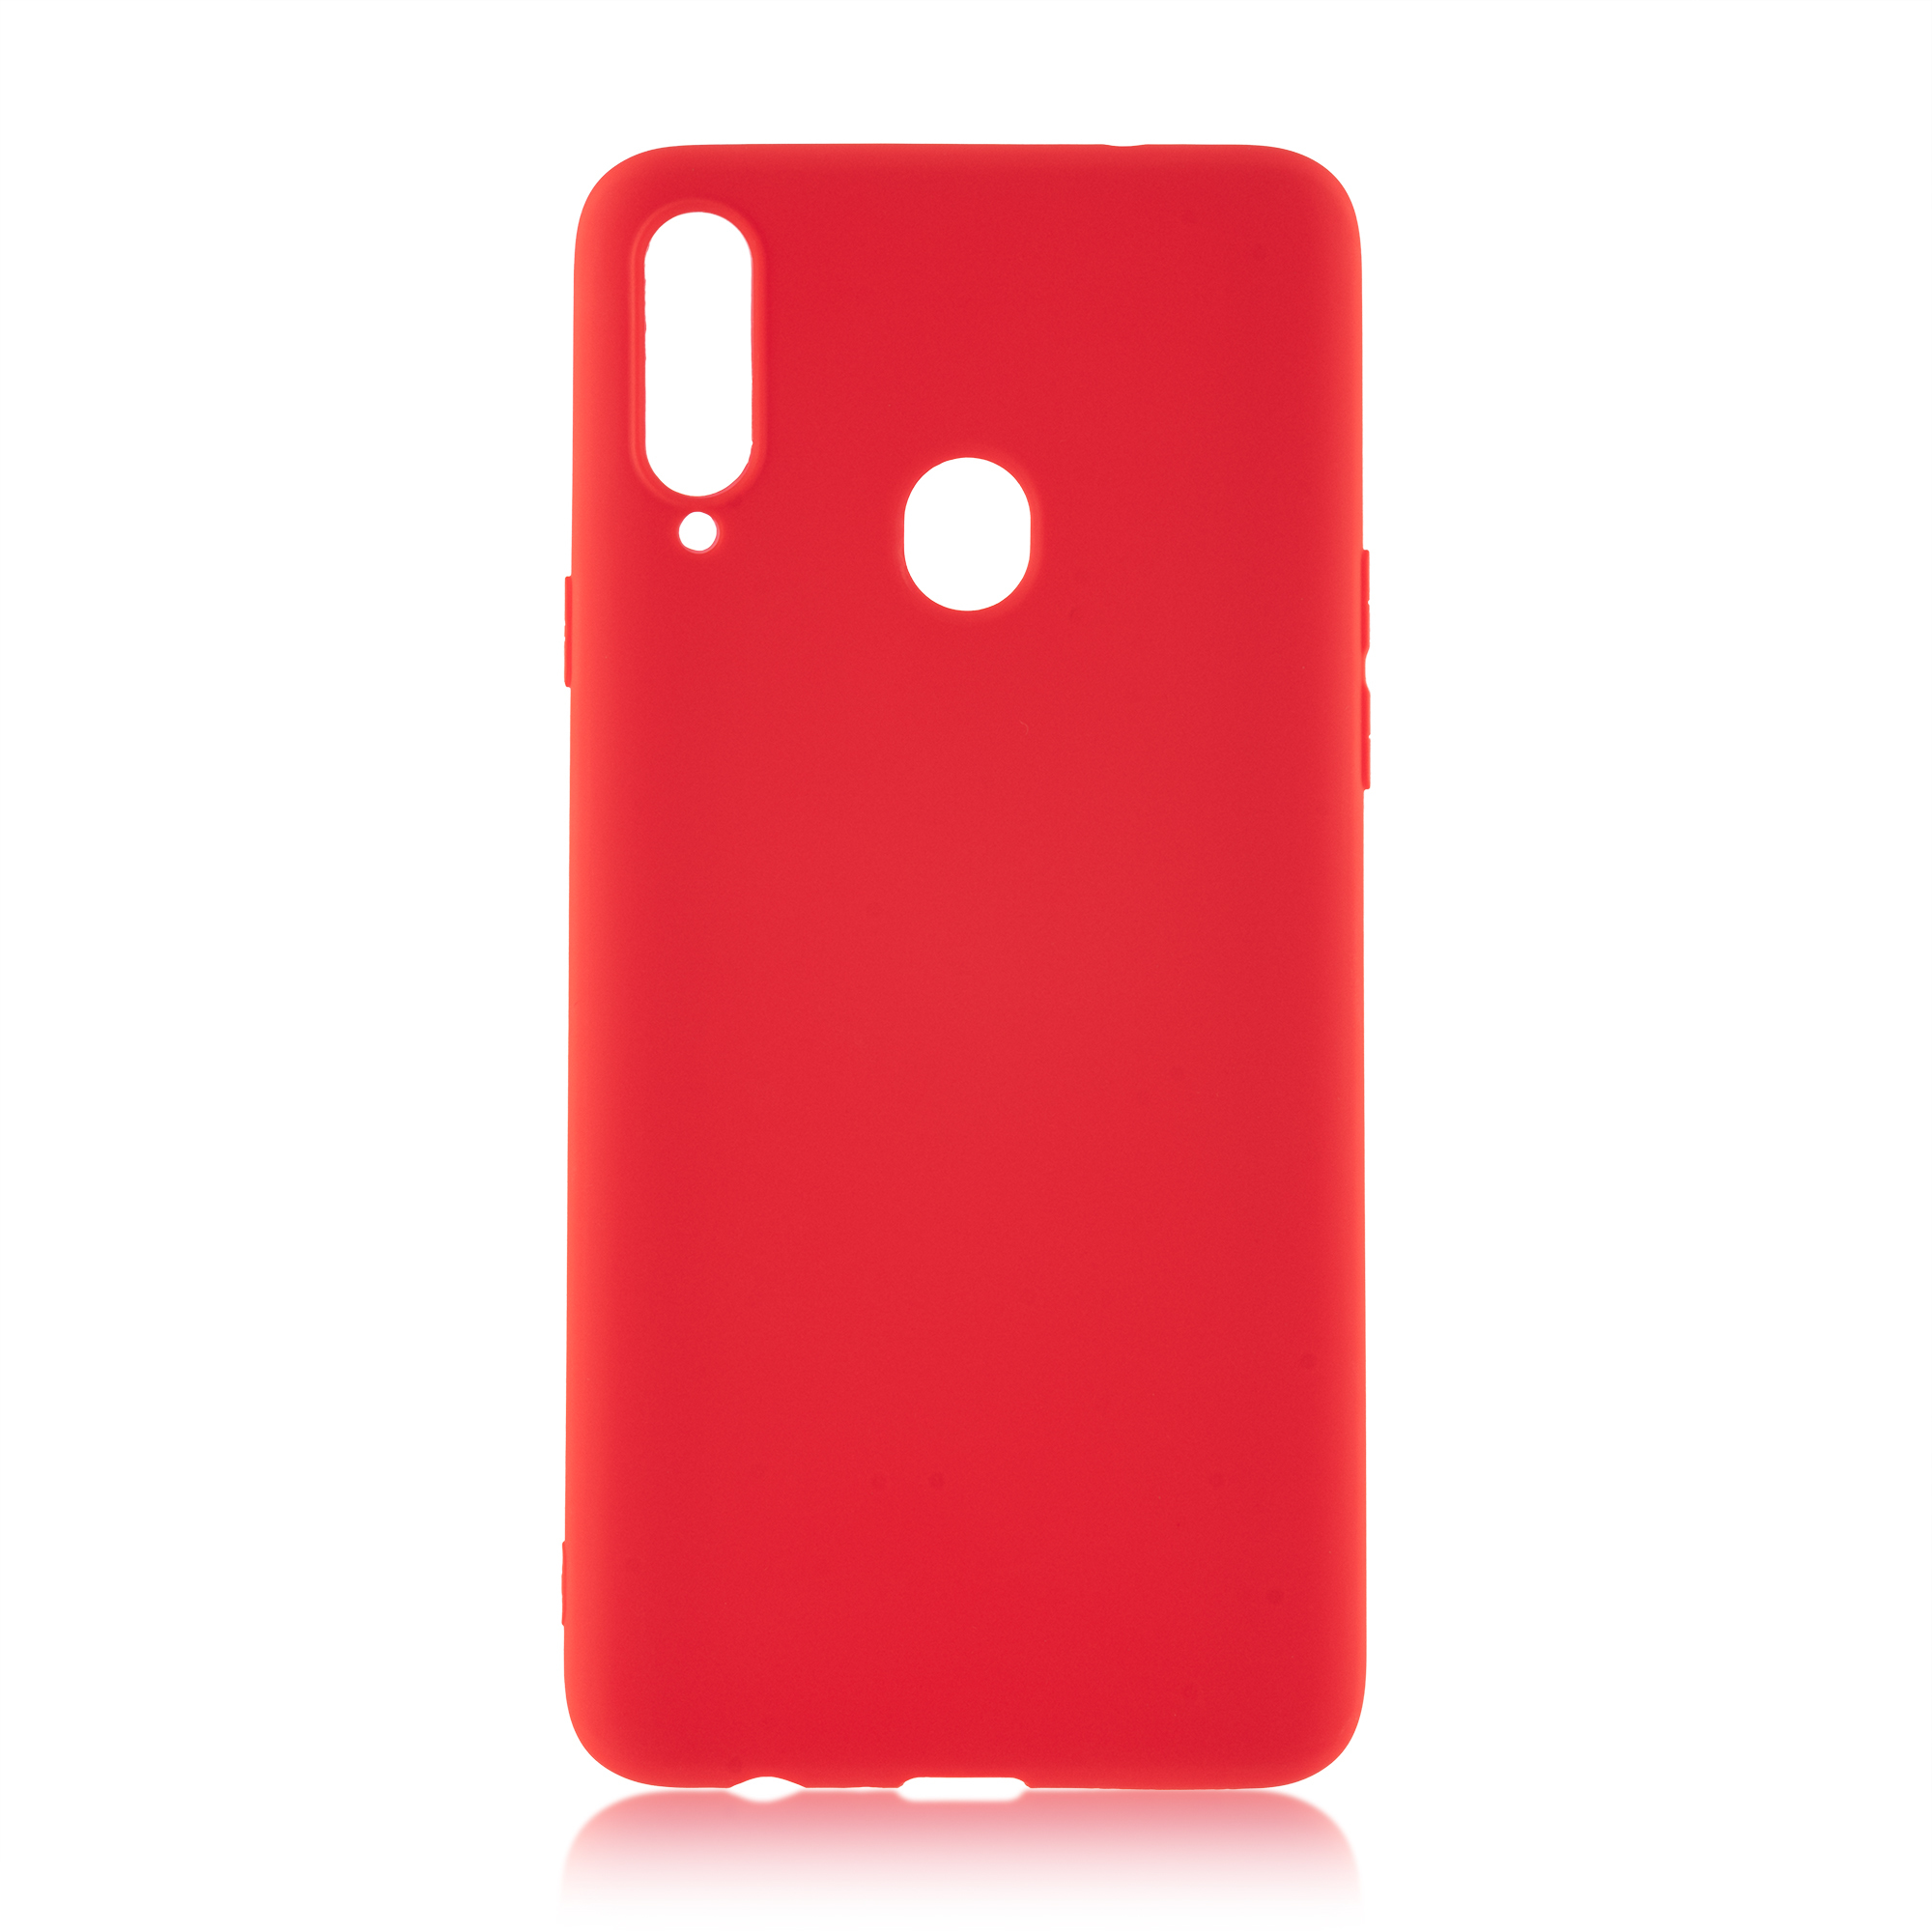 Чехол-накладка BROSCO Colourful для смартфона Samsung Galaxy A20s, силикон, красный (SS-A20S-COLOURFUL-RED)